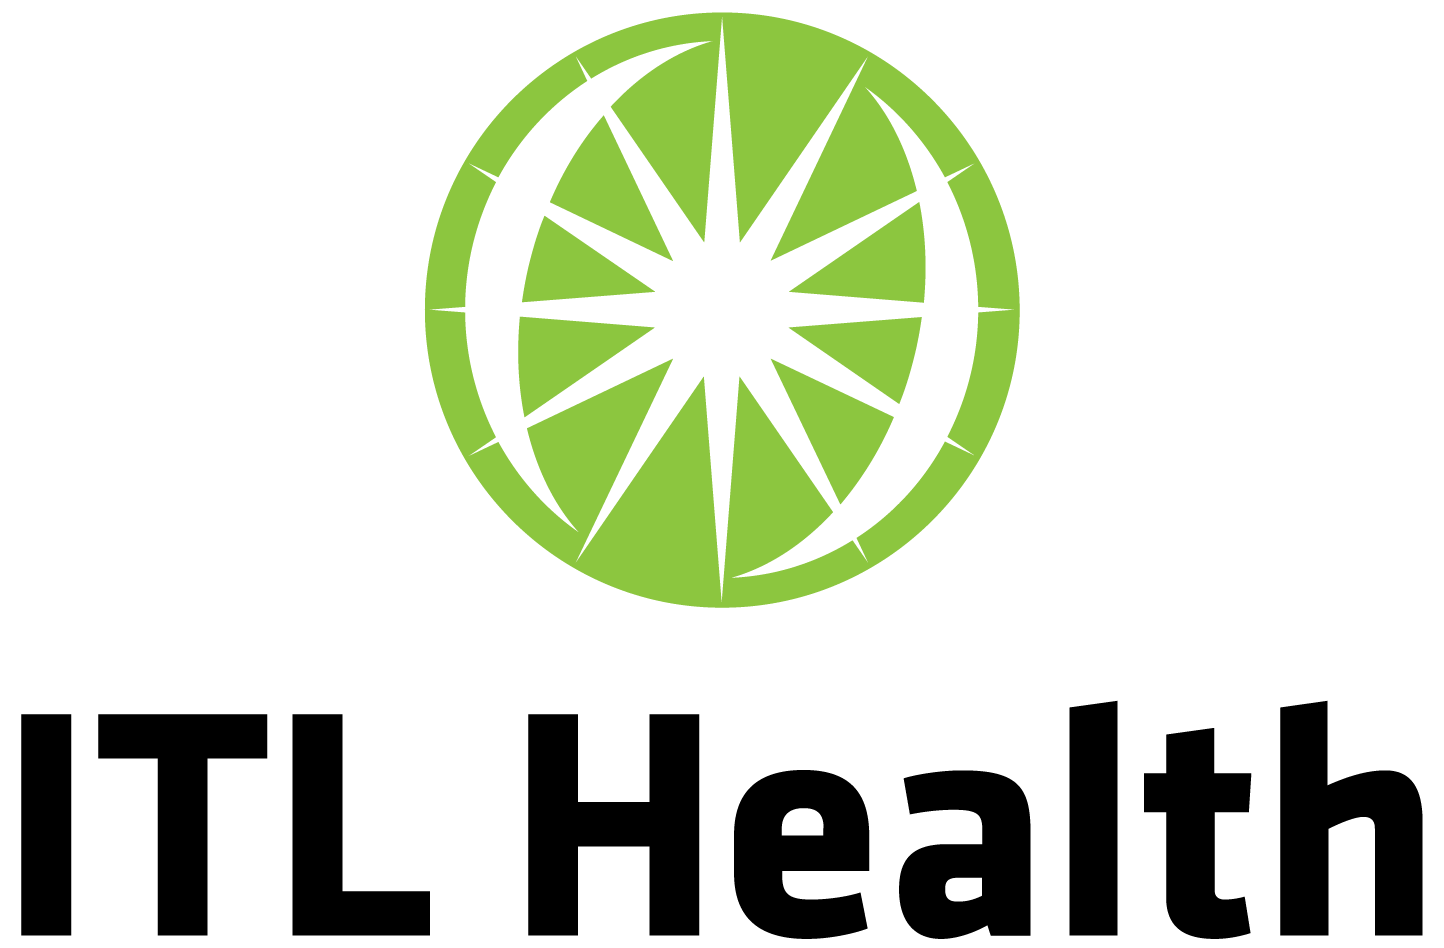 ITL Health